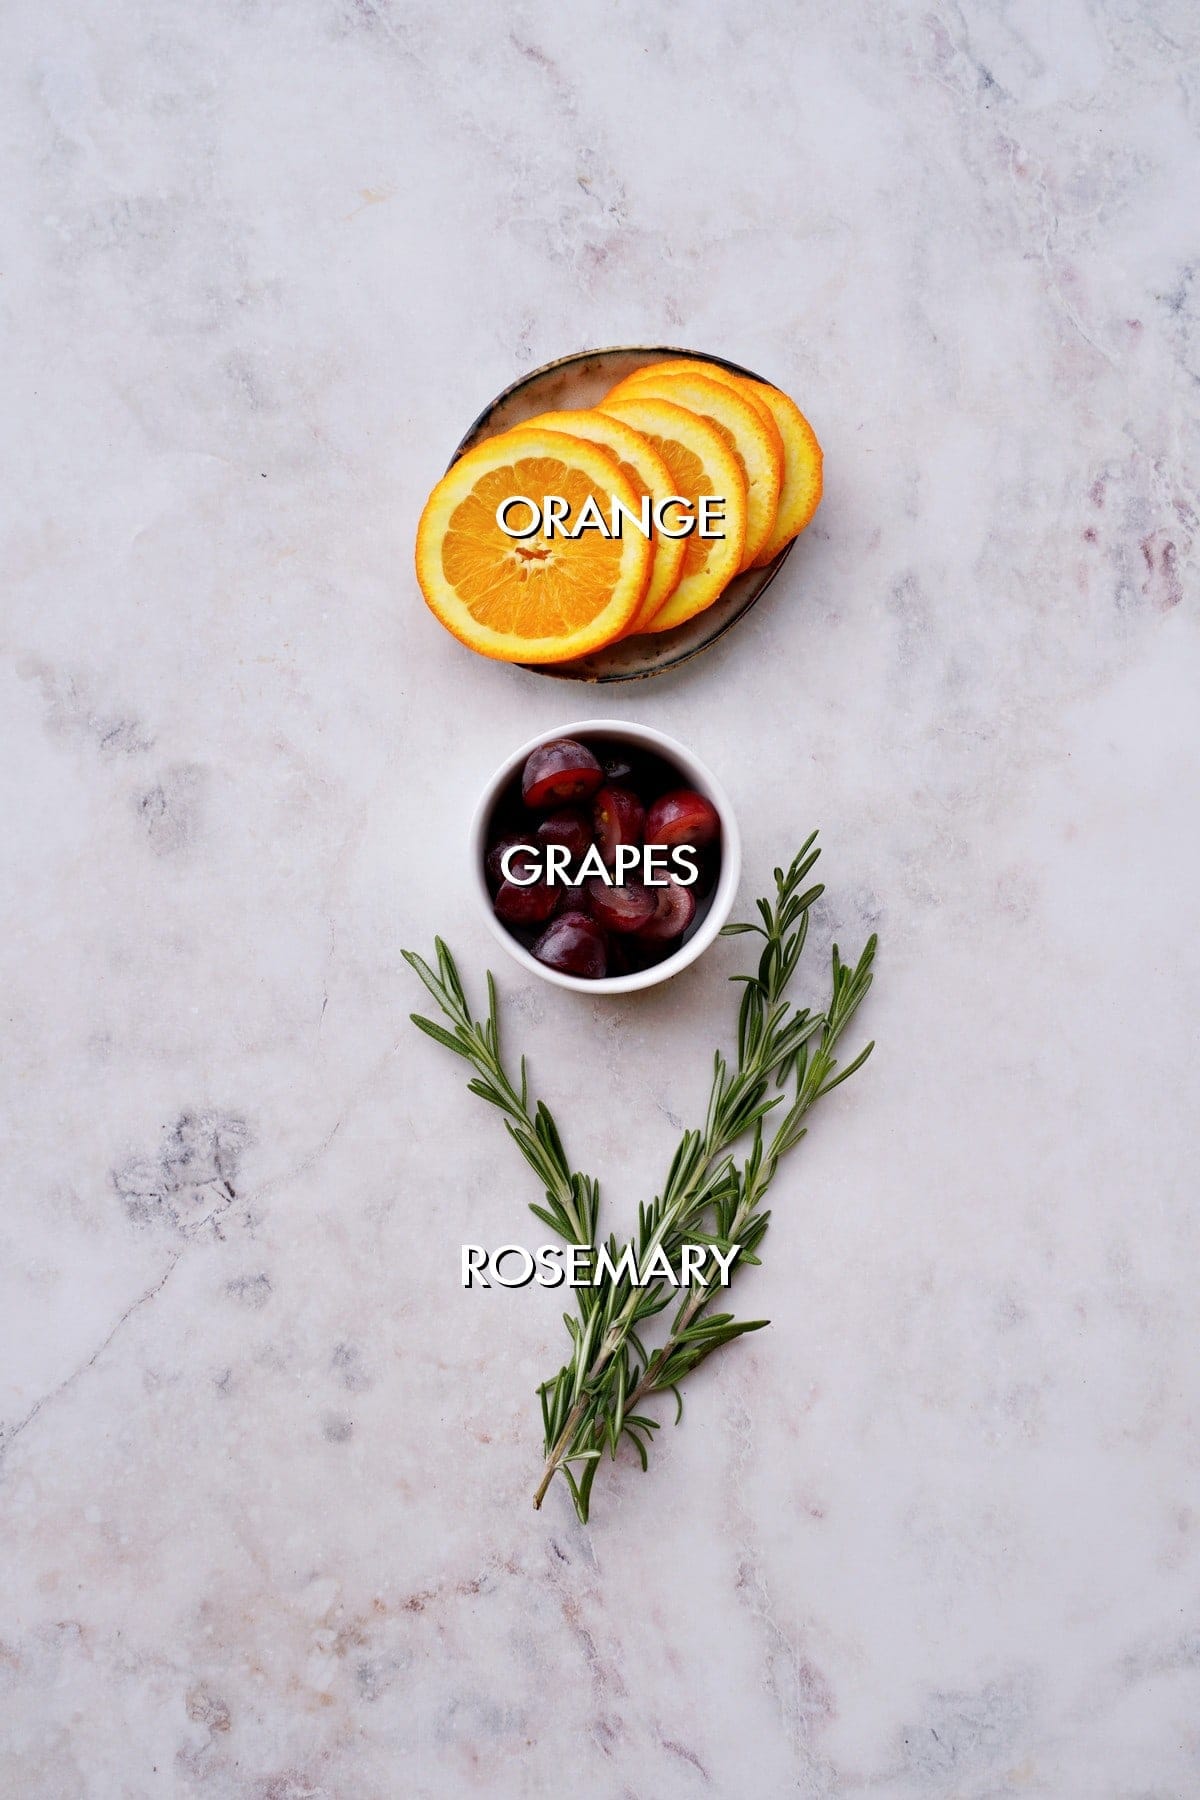 orange, grapes and rosemary on white backdrop